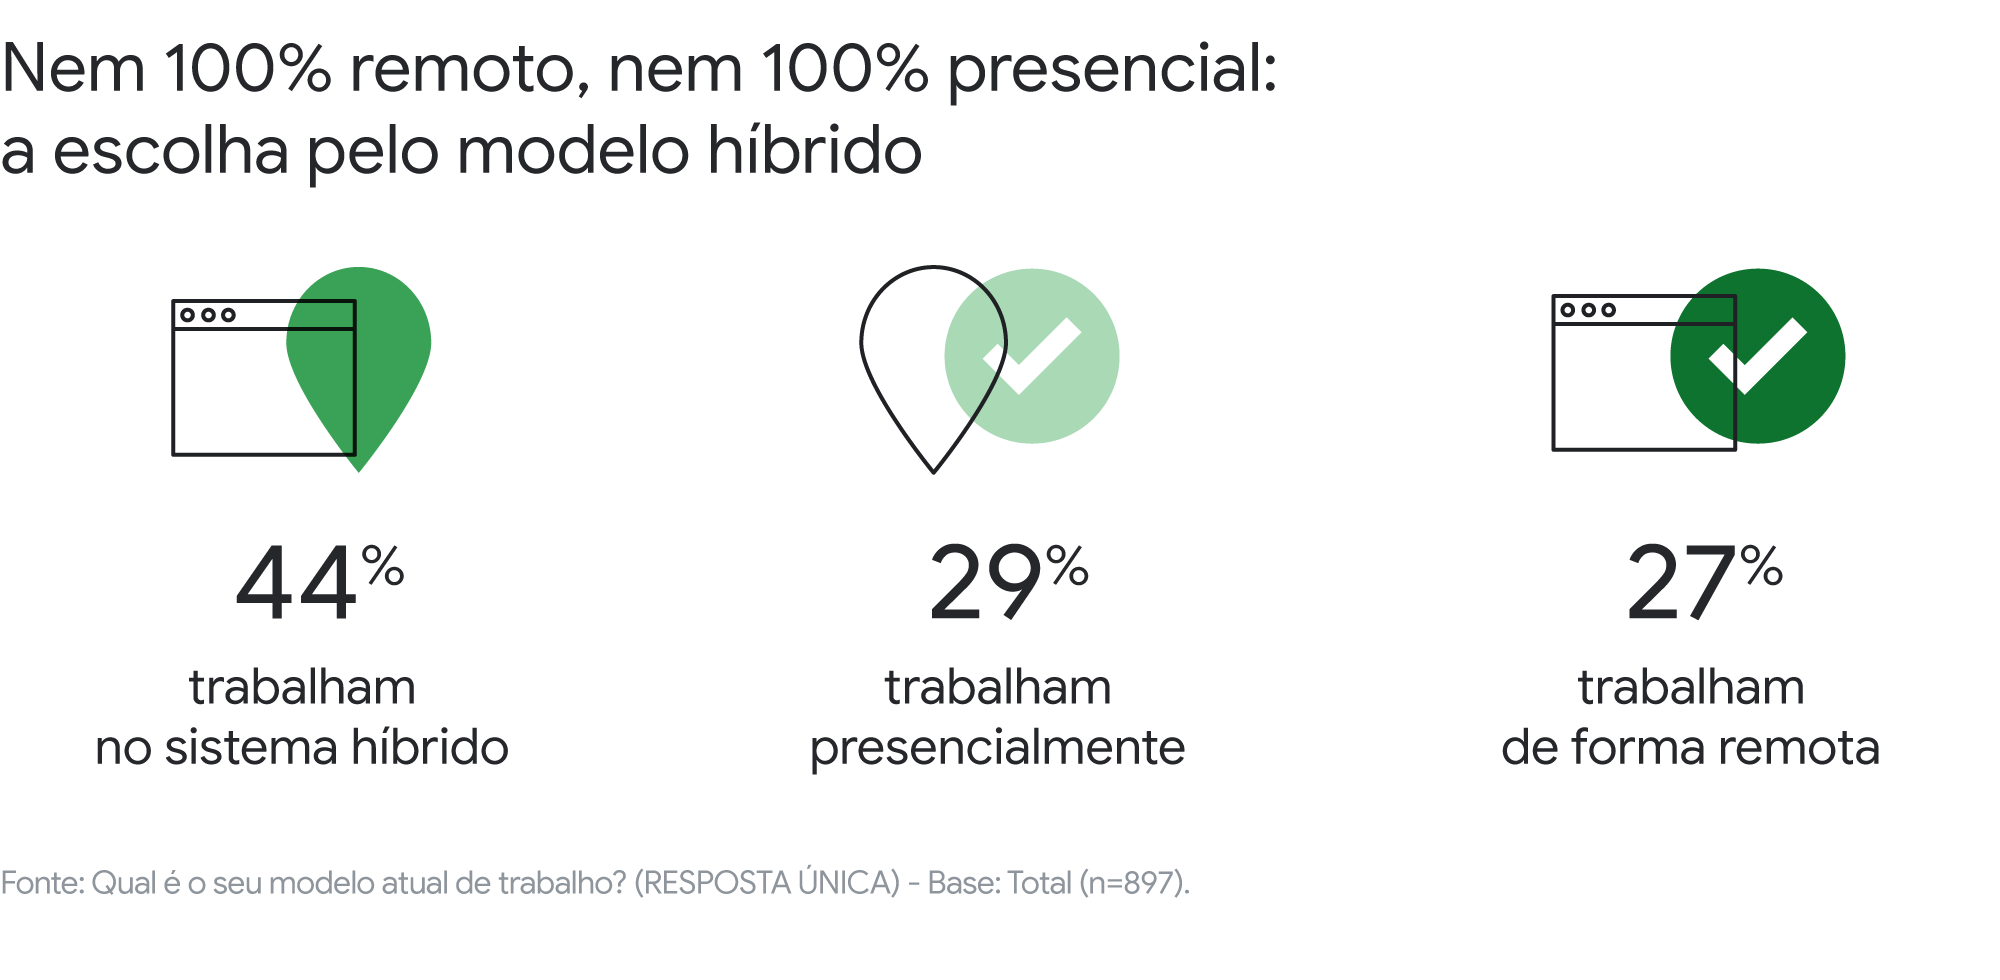 Como iremos trabalhar no pós-pandemia? Descubra dados e insights sobre o futuro dos escritórios brasileiros